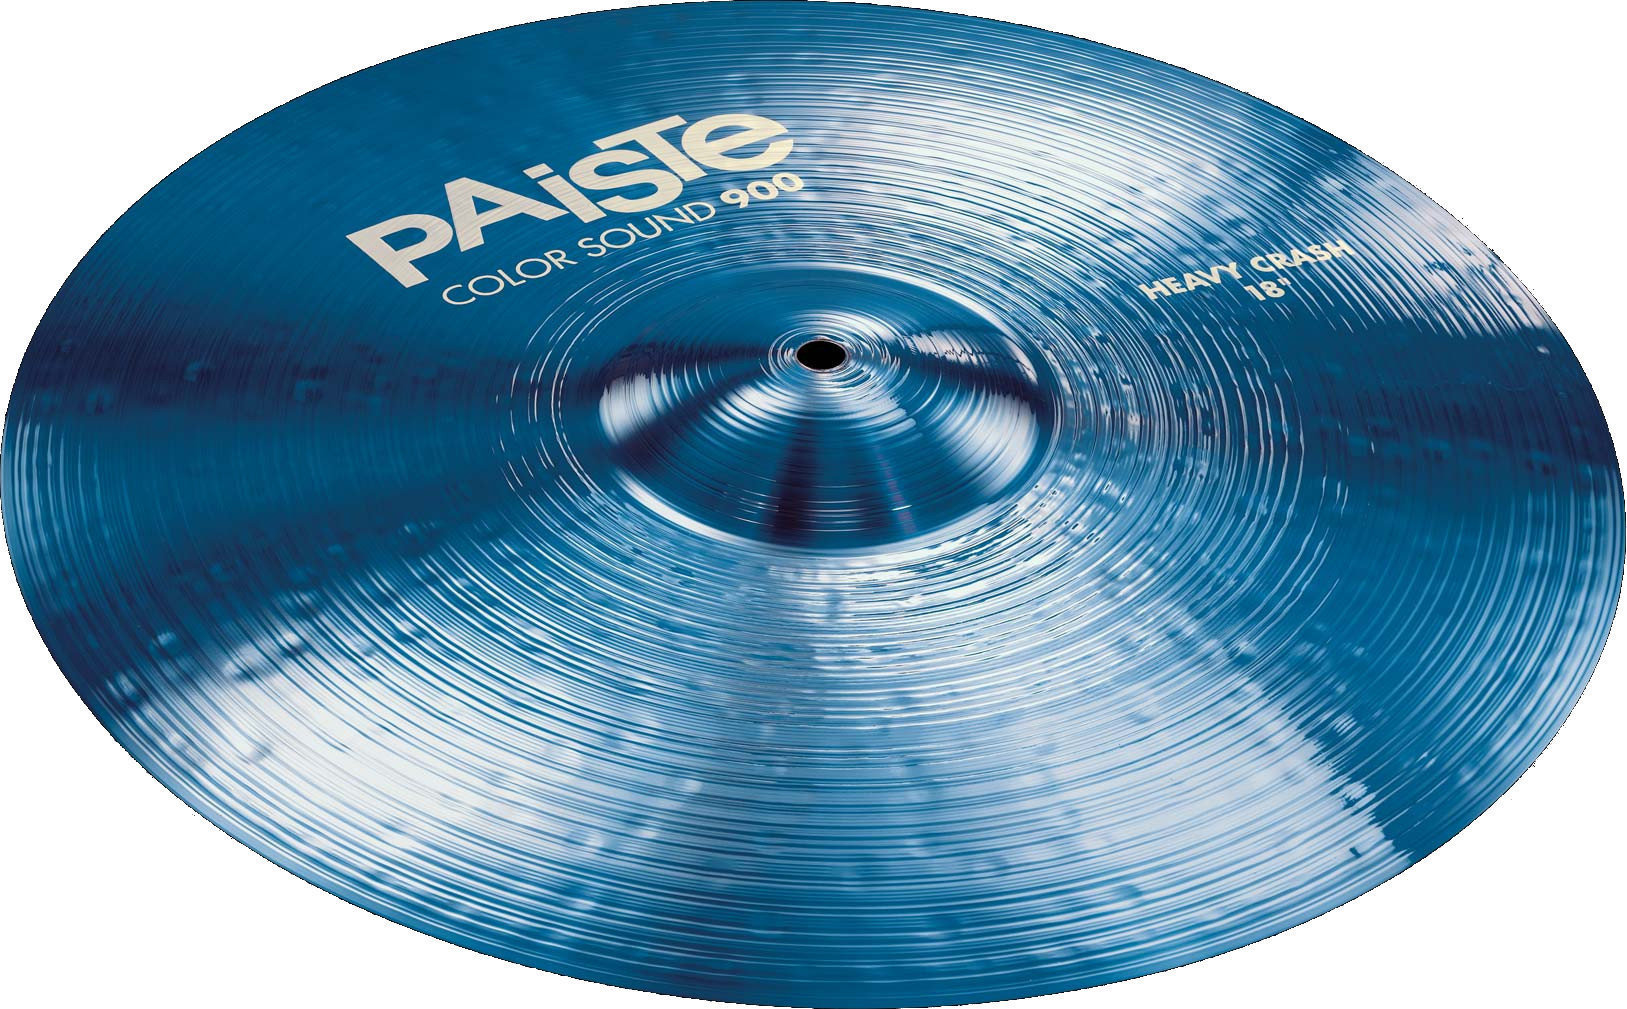 Crash Cymbal Paiste Color Sound 900  Heavy Crash Cymbal 18" Blue